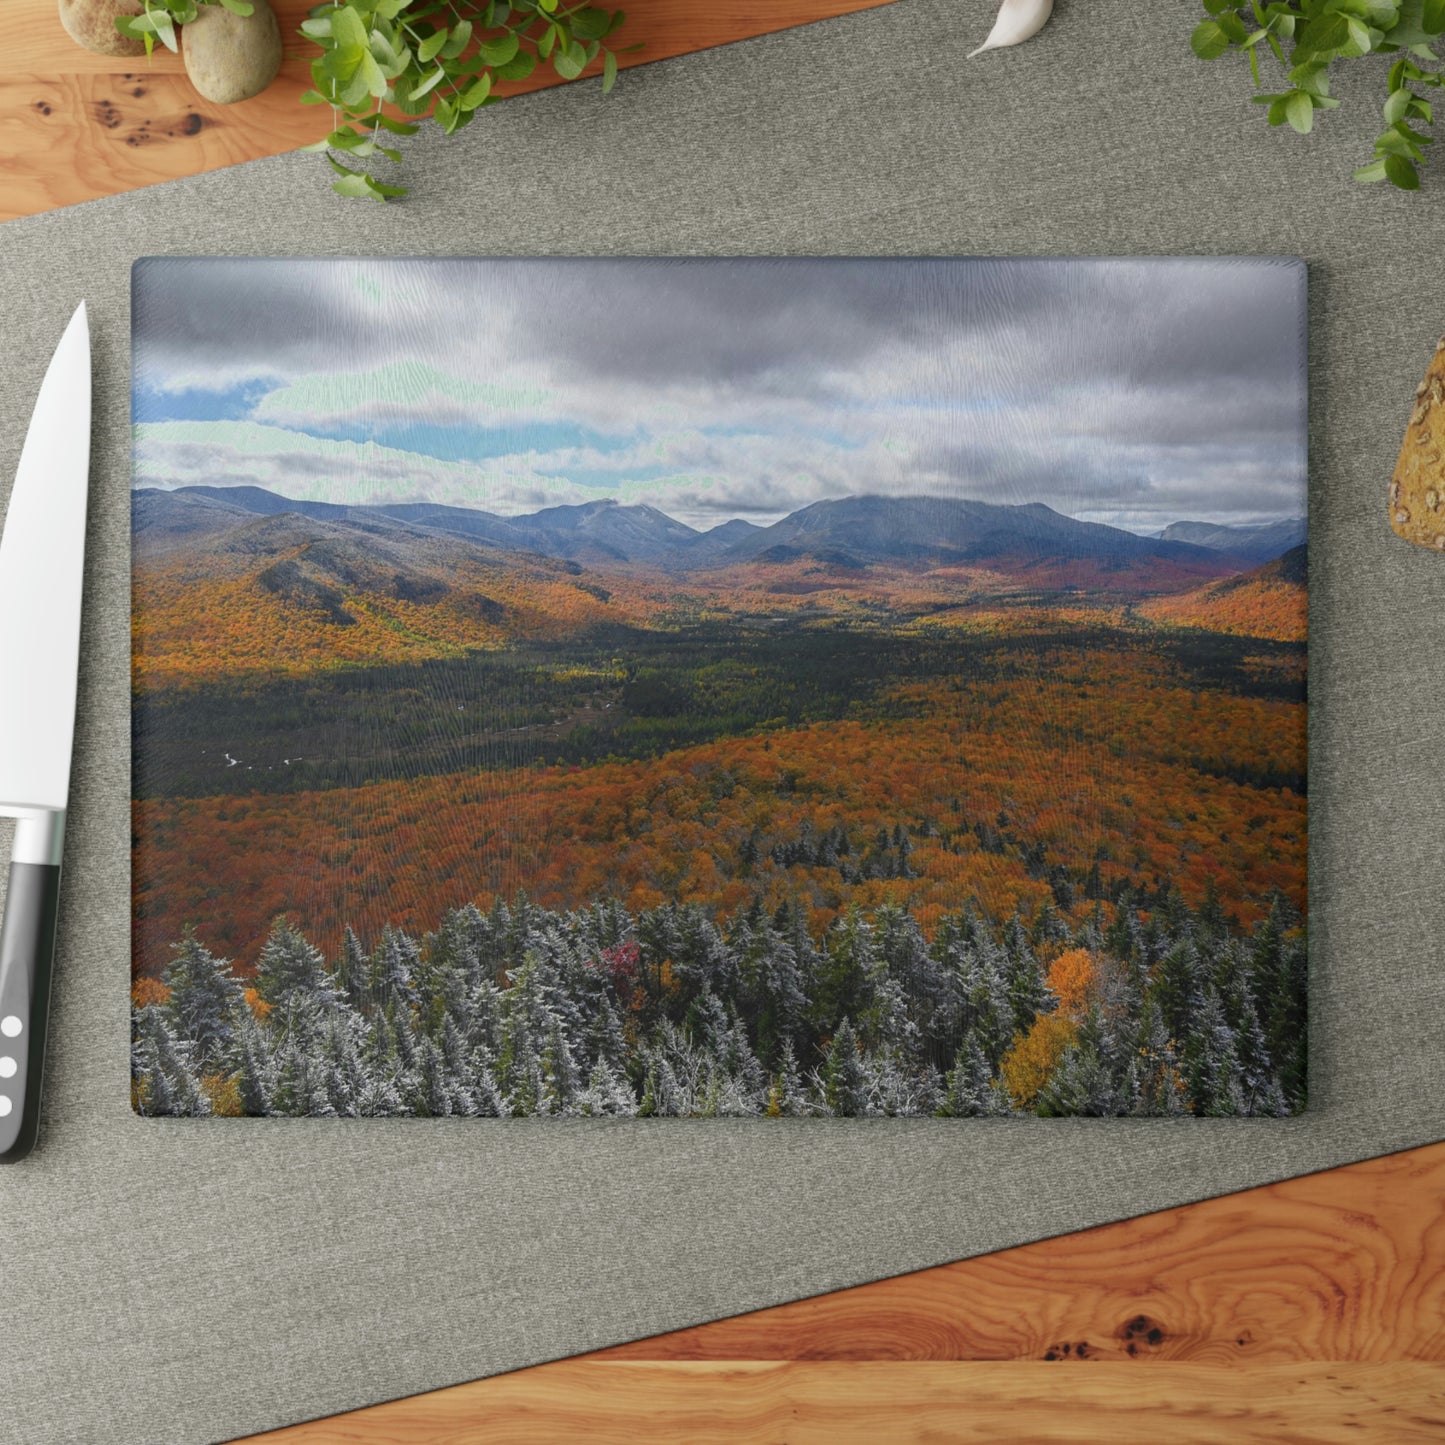 Glass Cutting Board - Frosty Fall Day, Mt. Van Hoevenberg